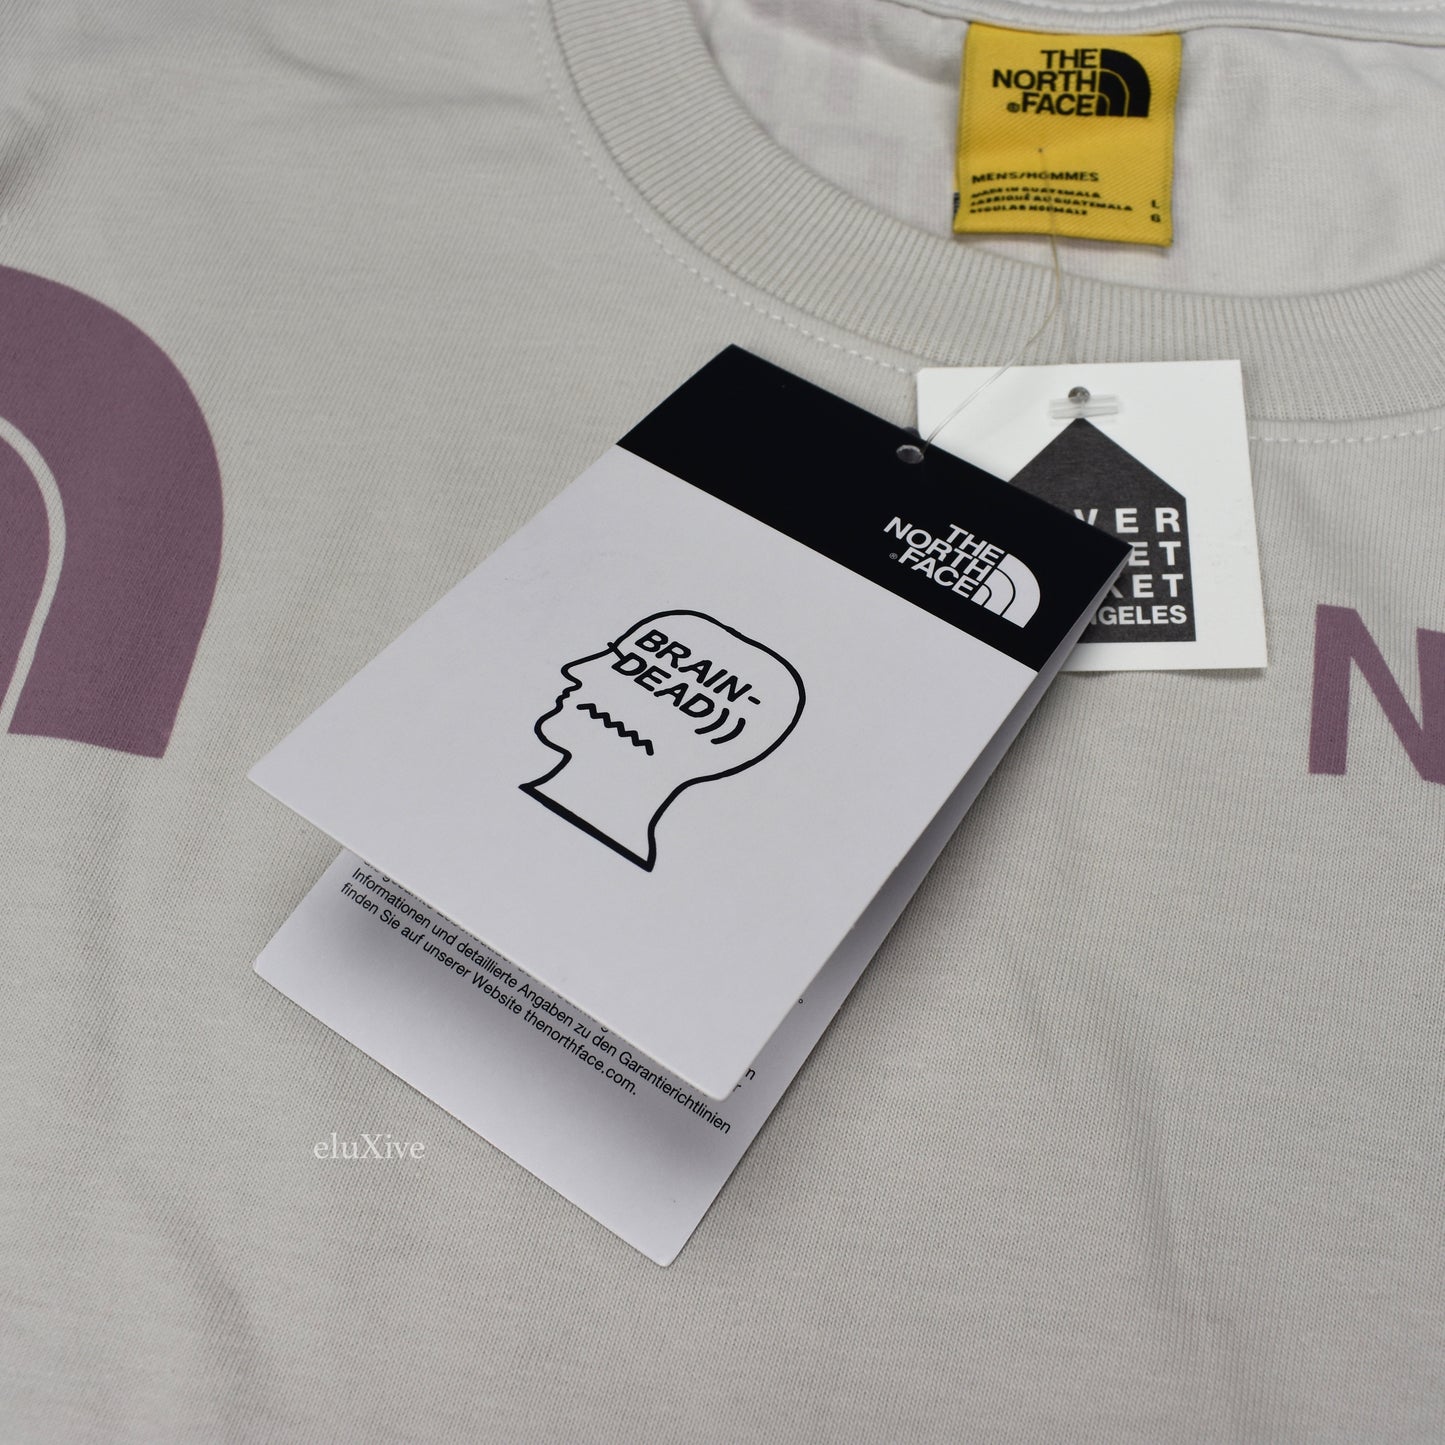 Brain Dead x The North Face - Allover Logo Print T-Shirt (Ivory)